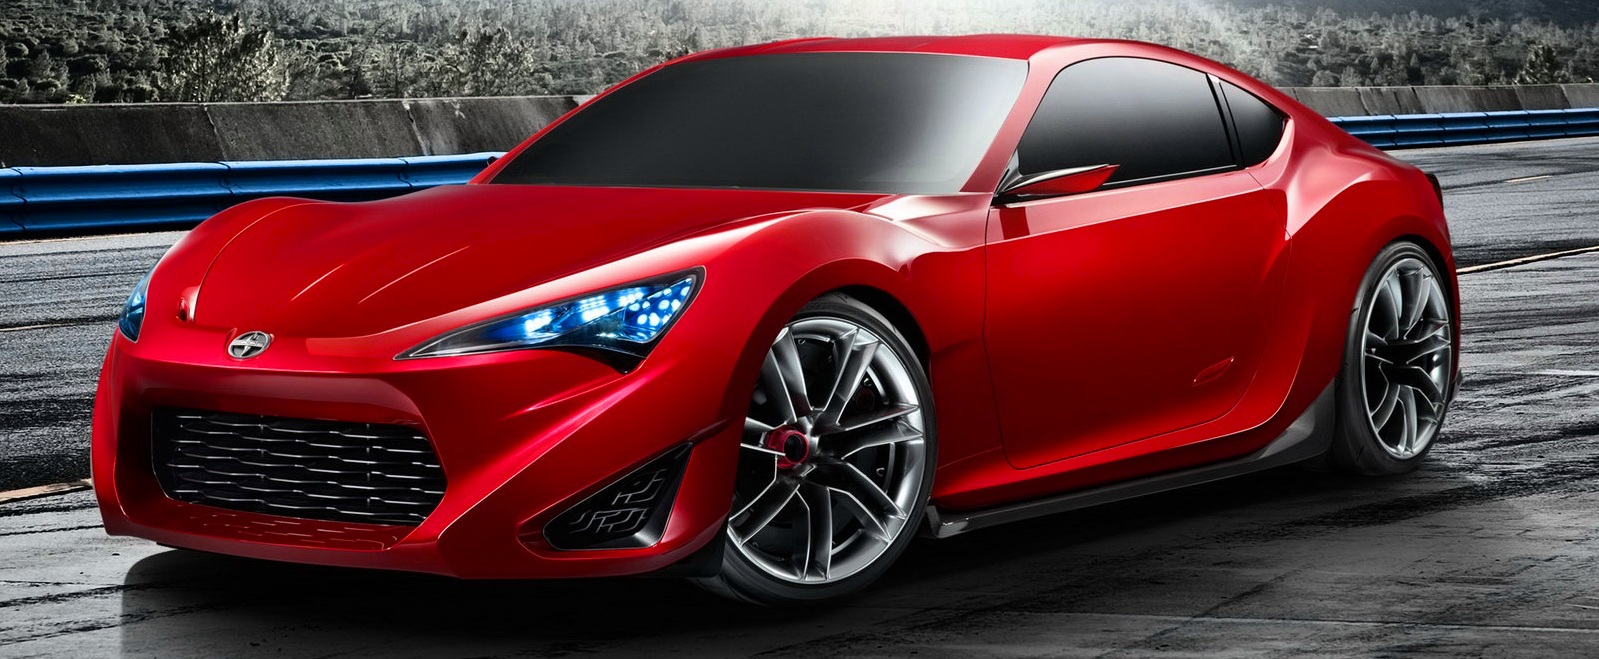 2015 Toyota Supra red